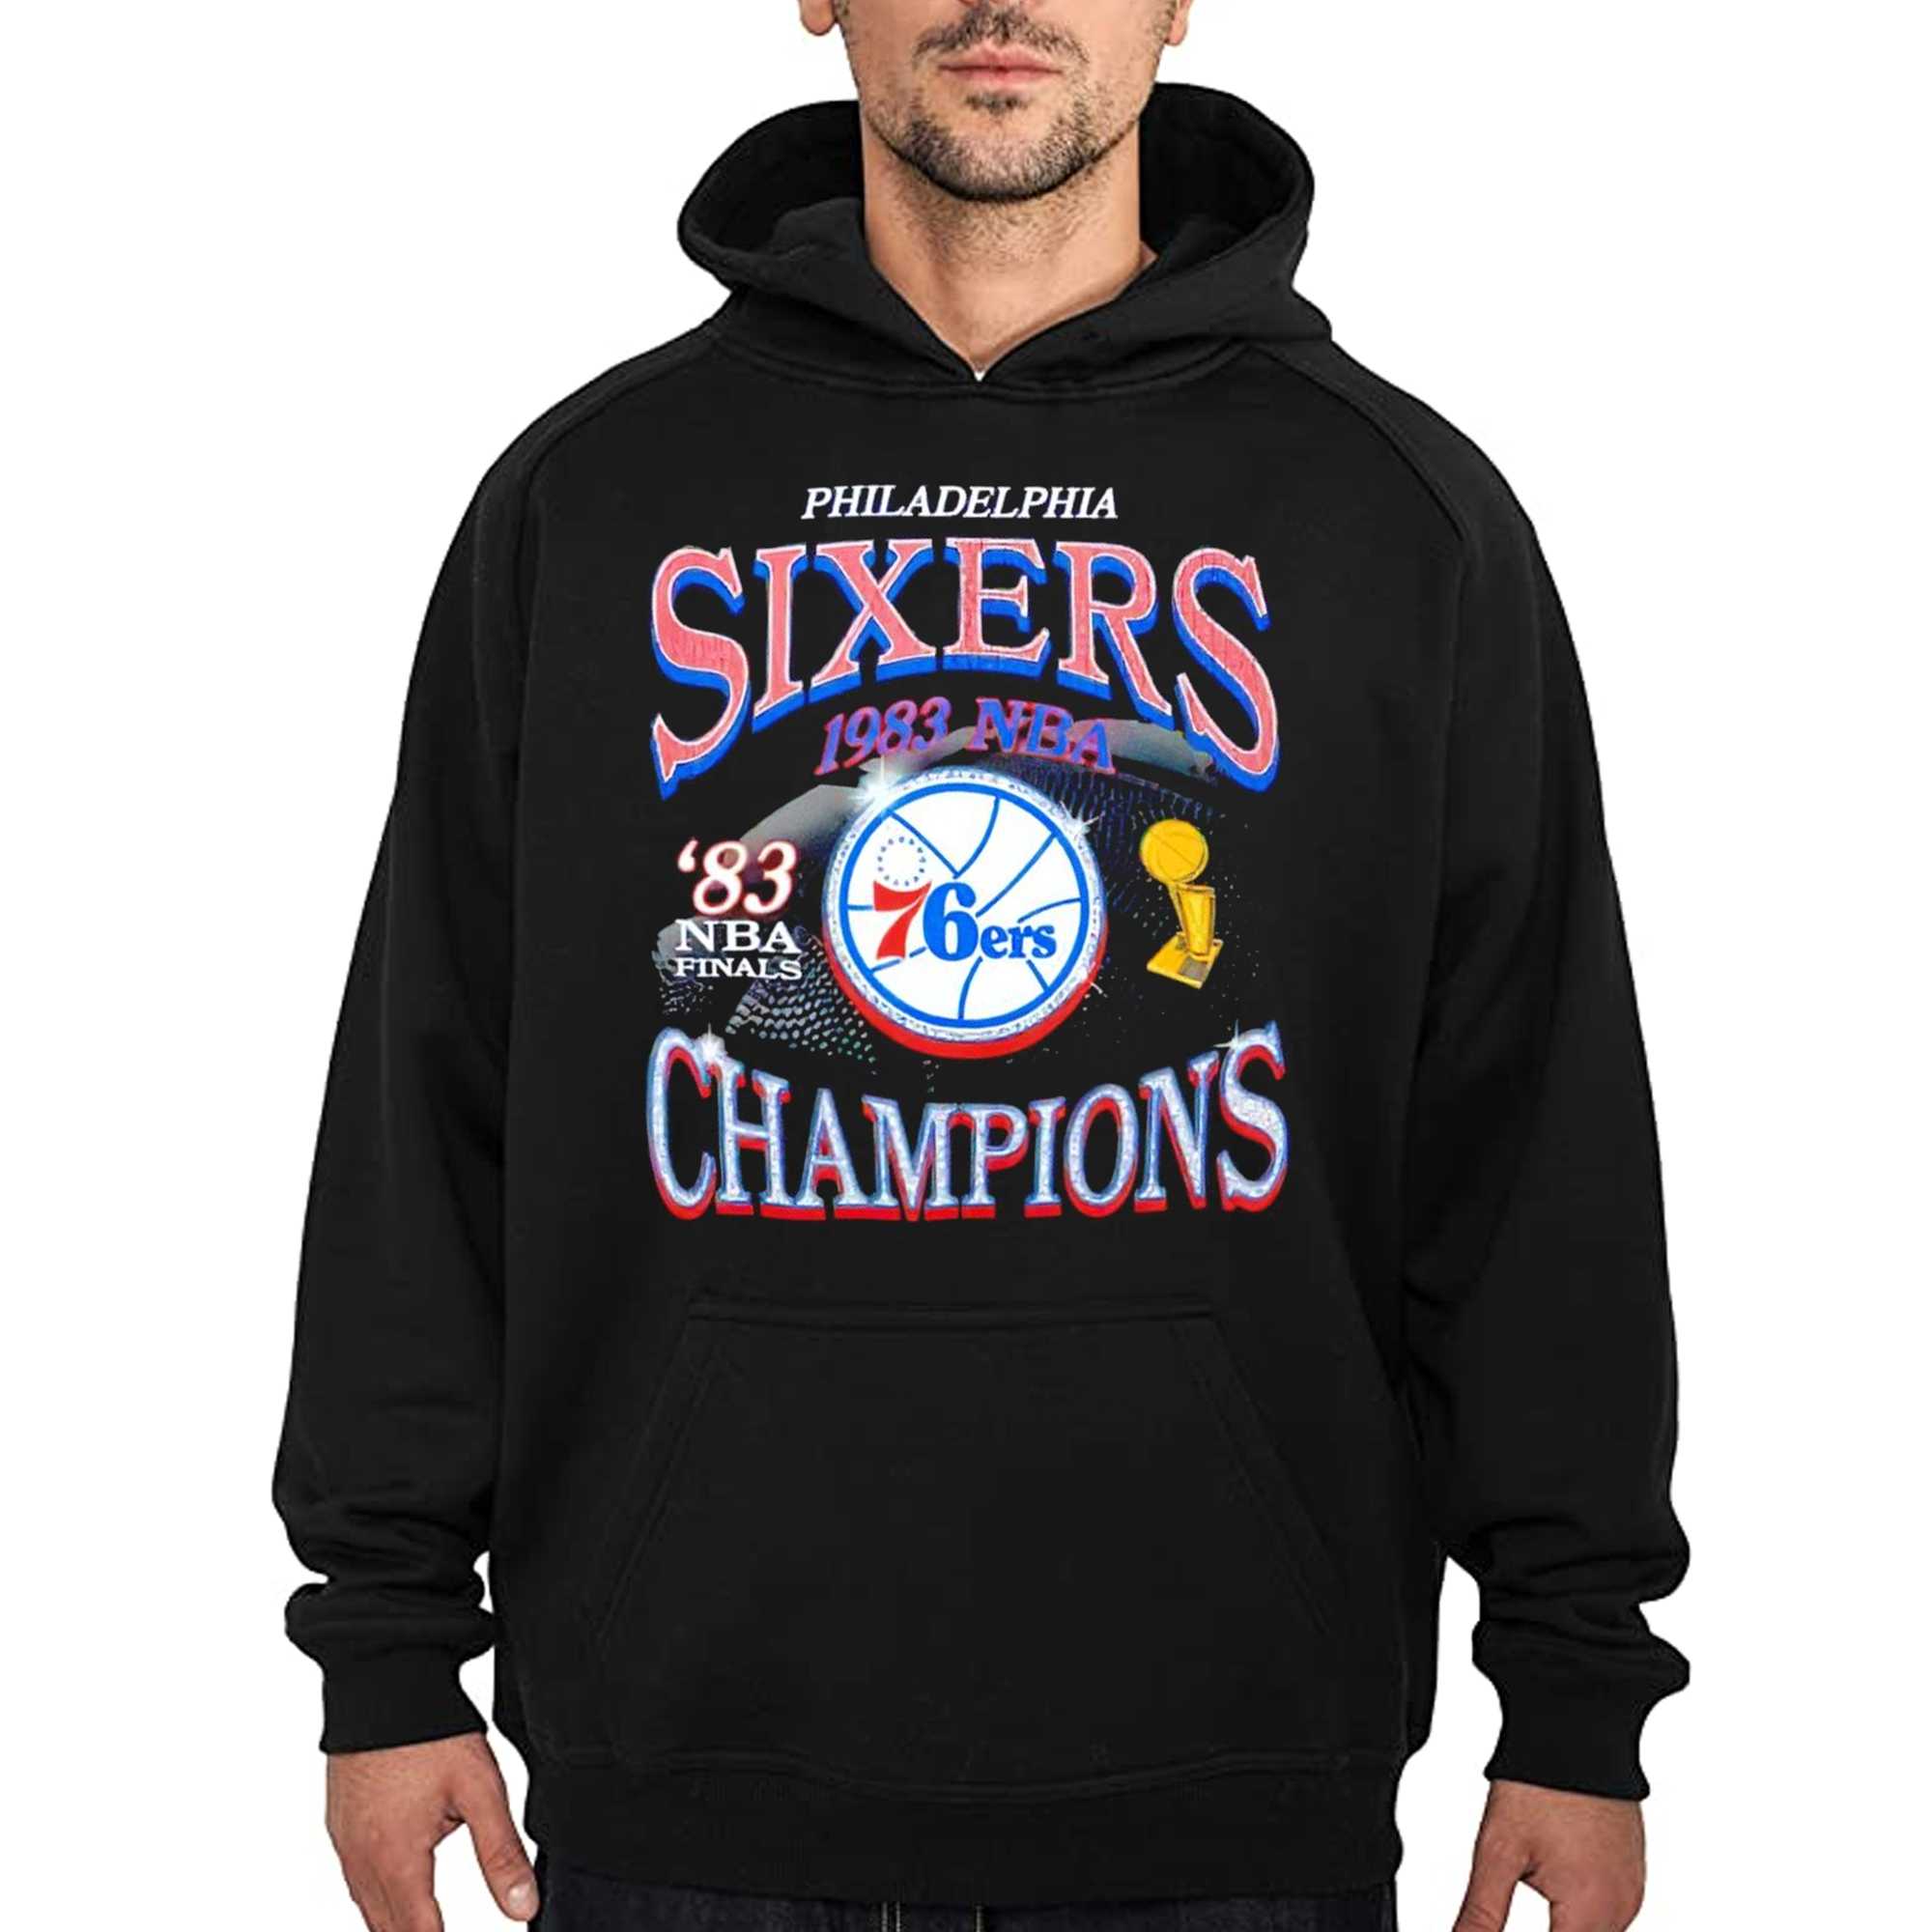 Philadelphia 76ers Playoff Merchandise, 76ers Apparel, Sixers Gear